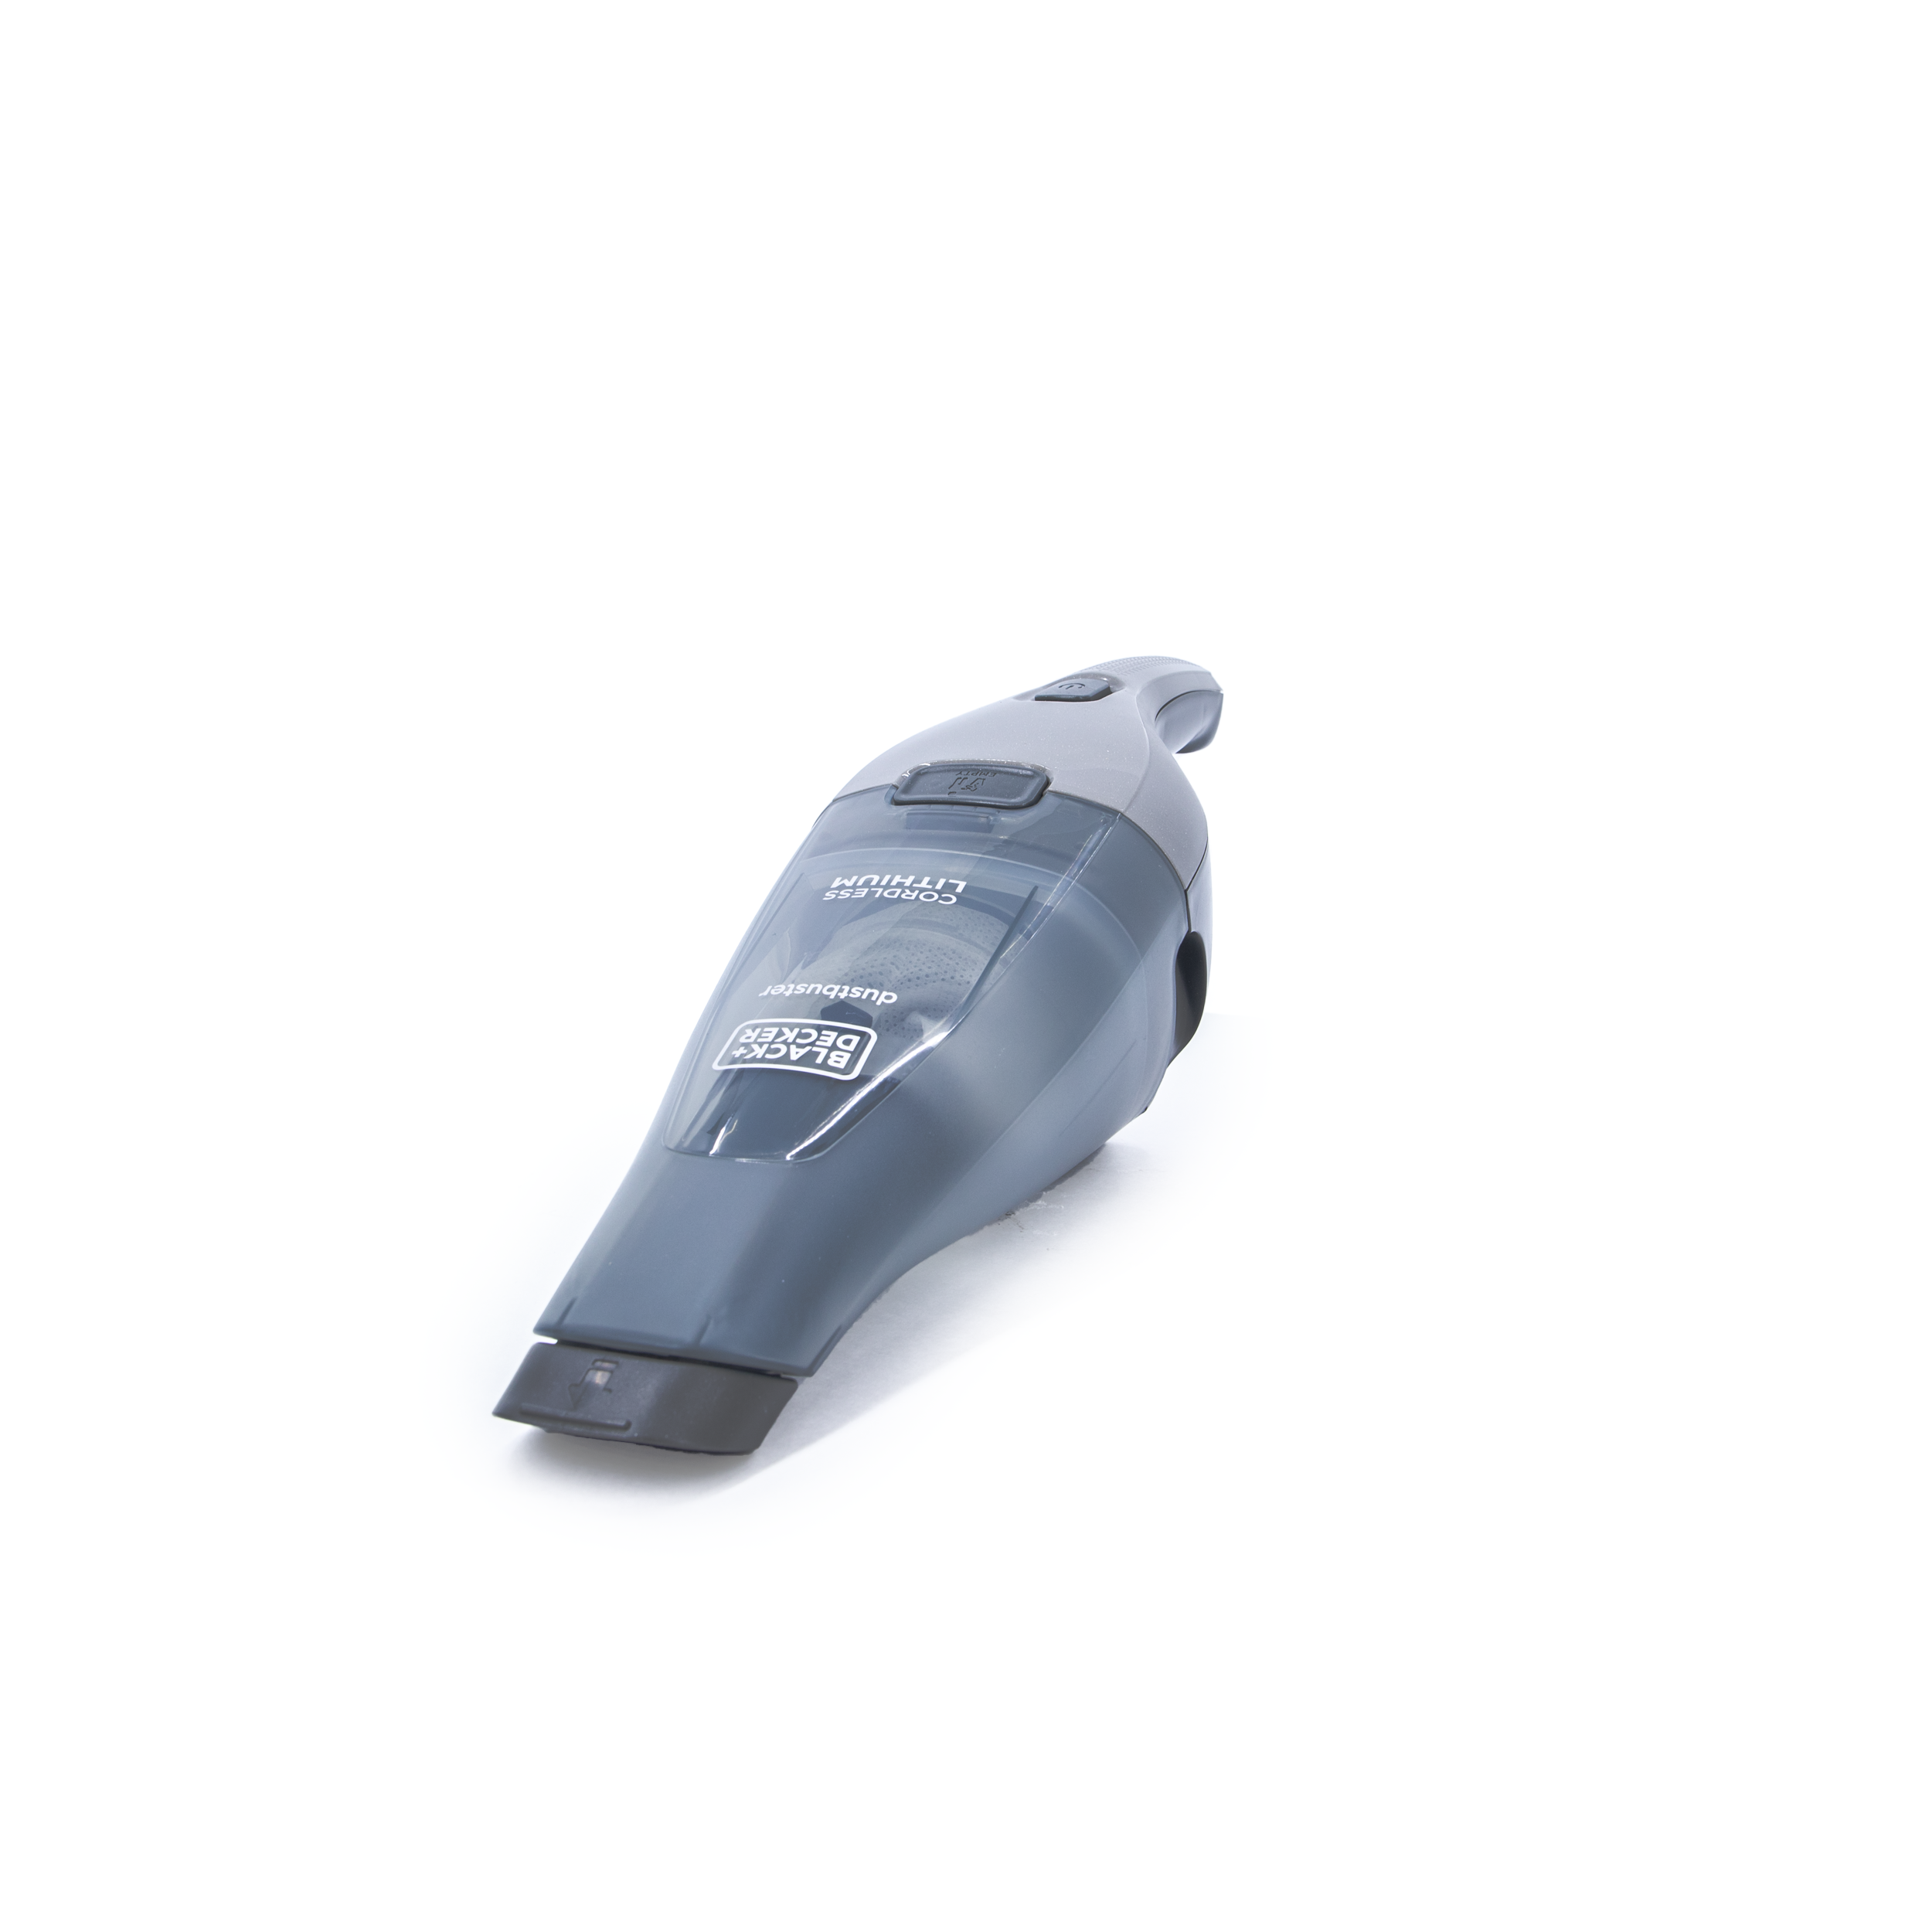 Black+decker Compact Lithium Handheld Vacuum - Gray Hnvc220bcz01